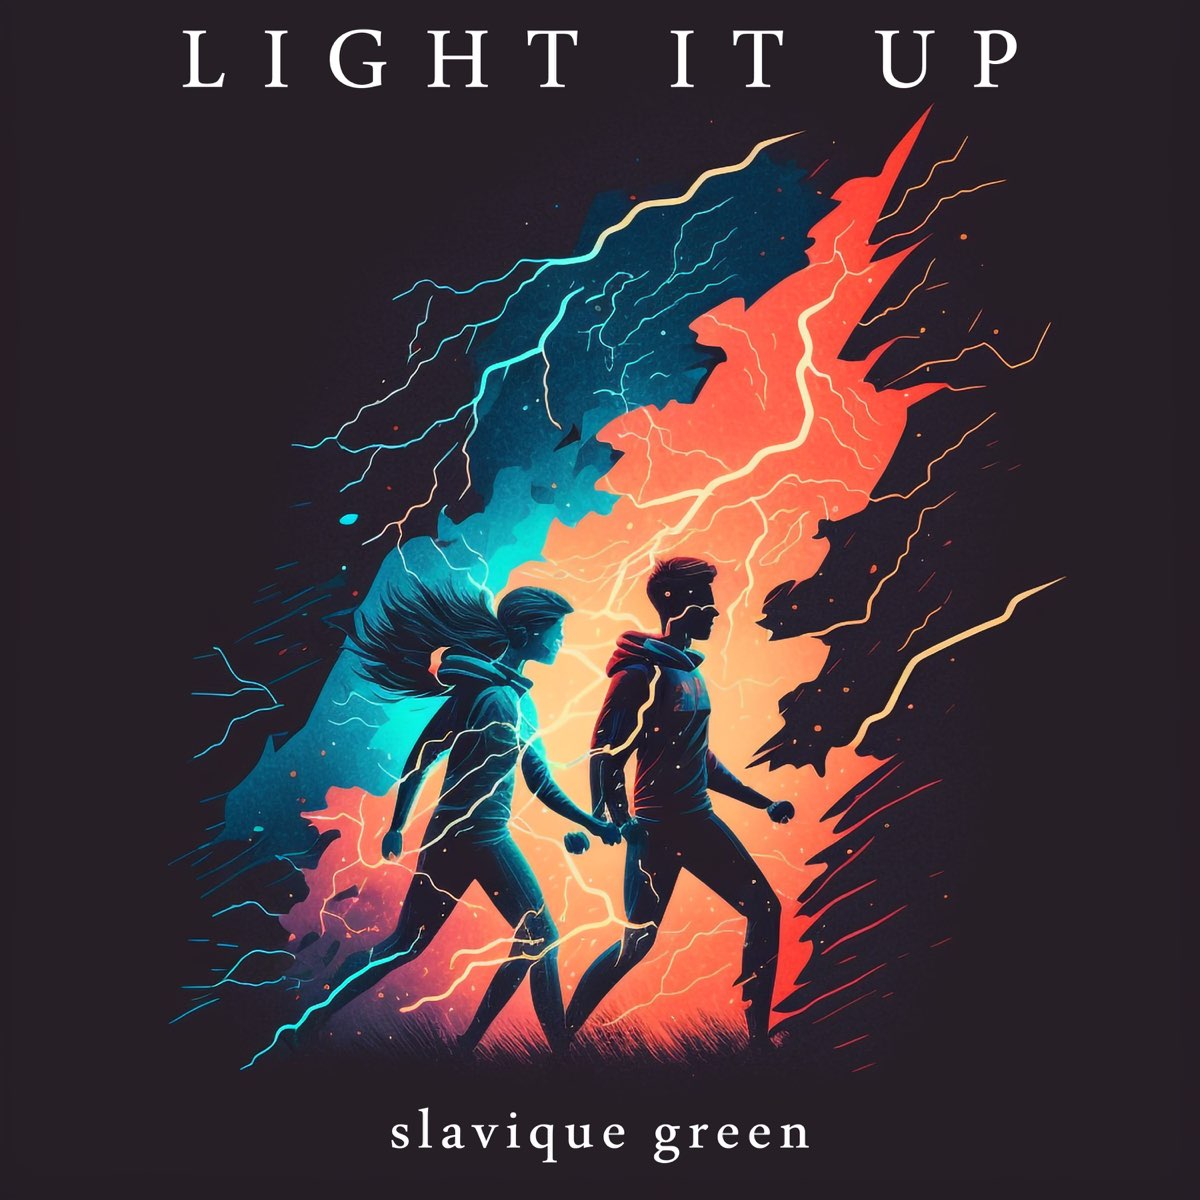 Slavique green your. Slavique Green. Slavique Green Trapped. "Slavique Green" && ( исполнитель | группа | музыка | Music | Band | artist ) && (фото | photo). Slavique Green Википедия.